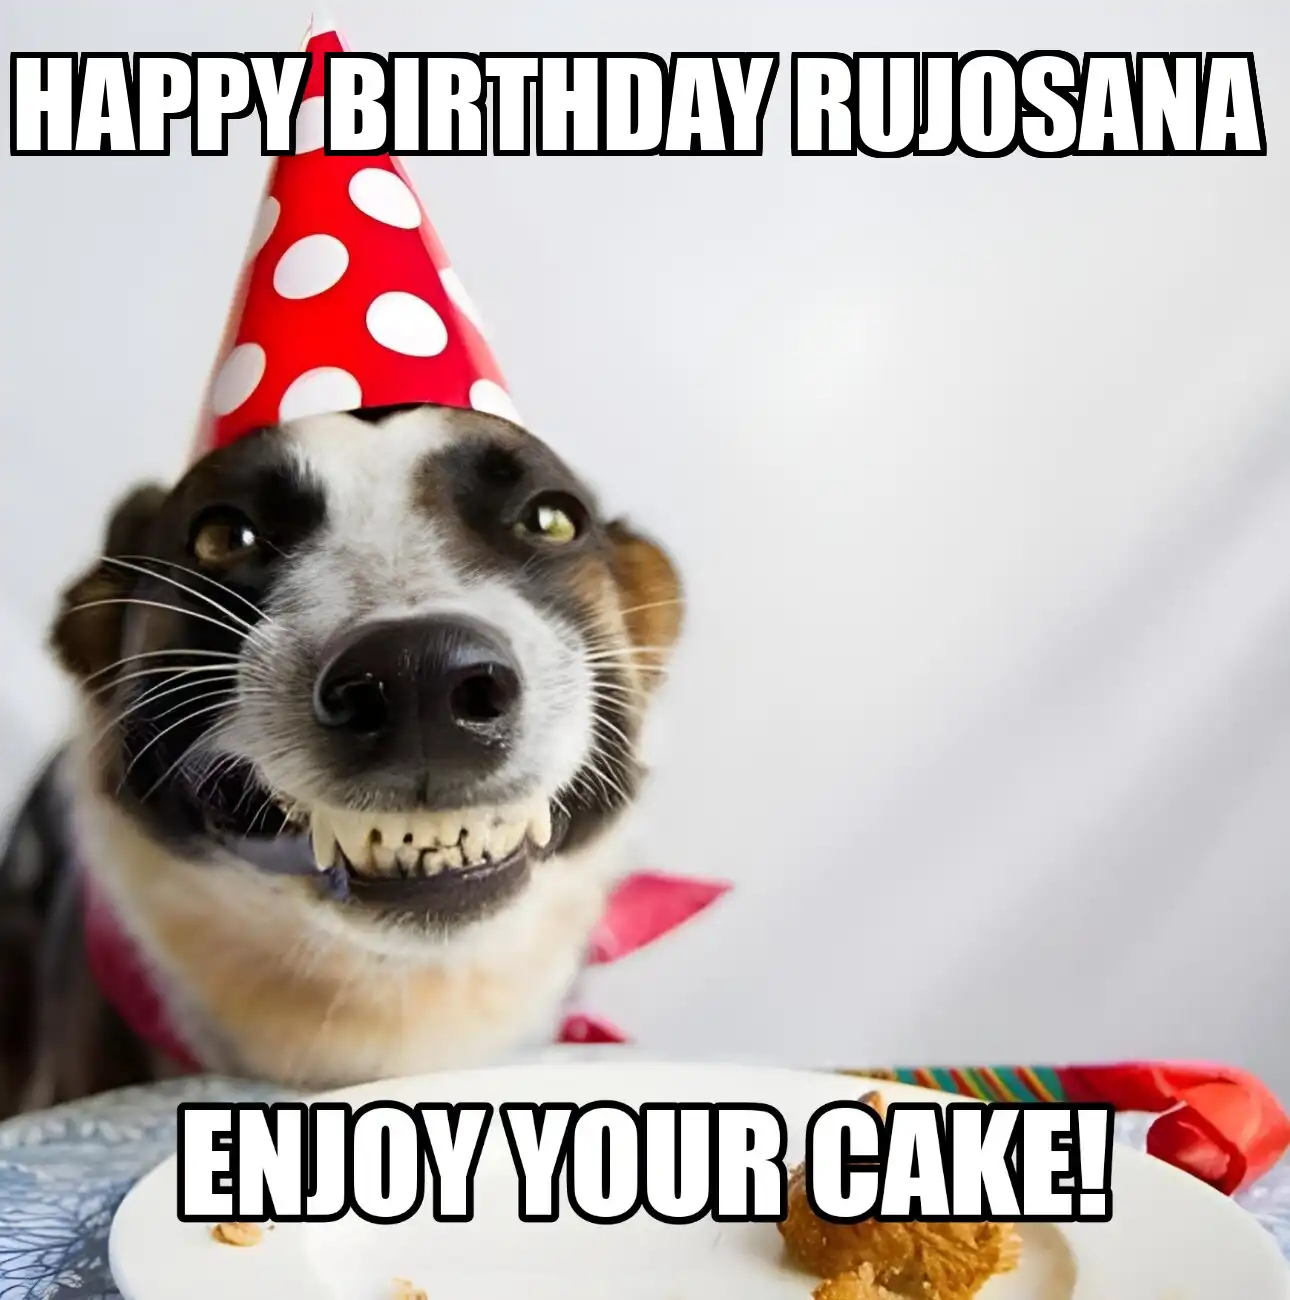 Happy Birthday Rujosana Enjoy Your Cake Dog Meme